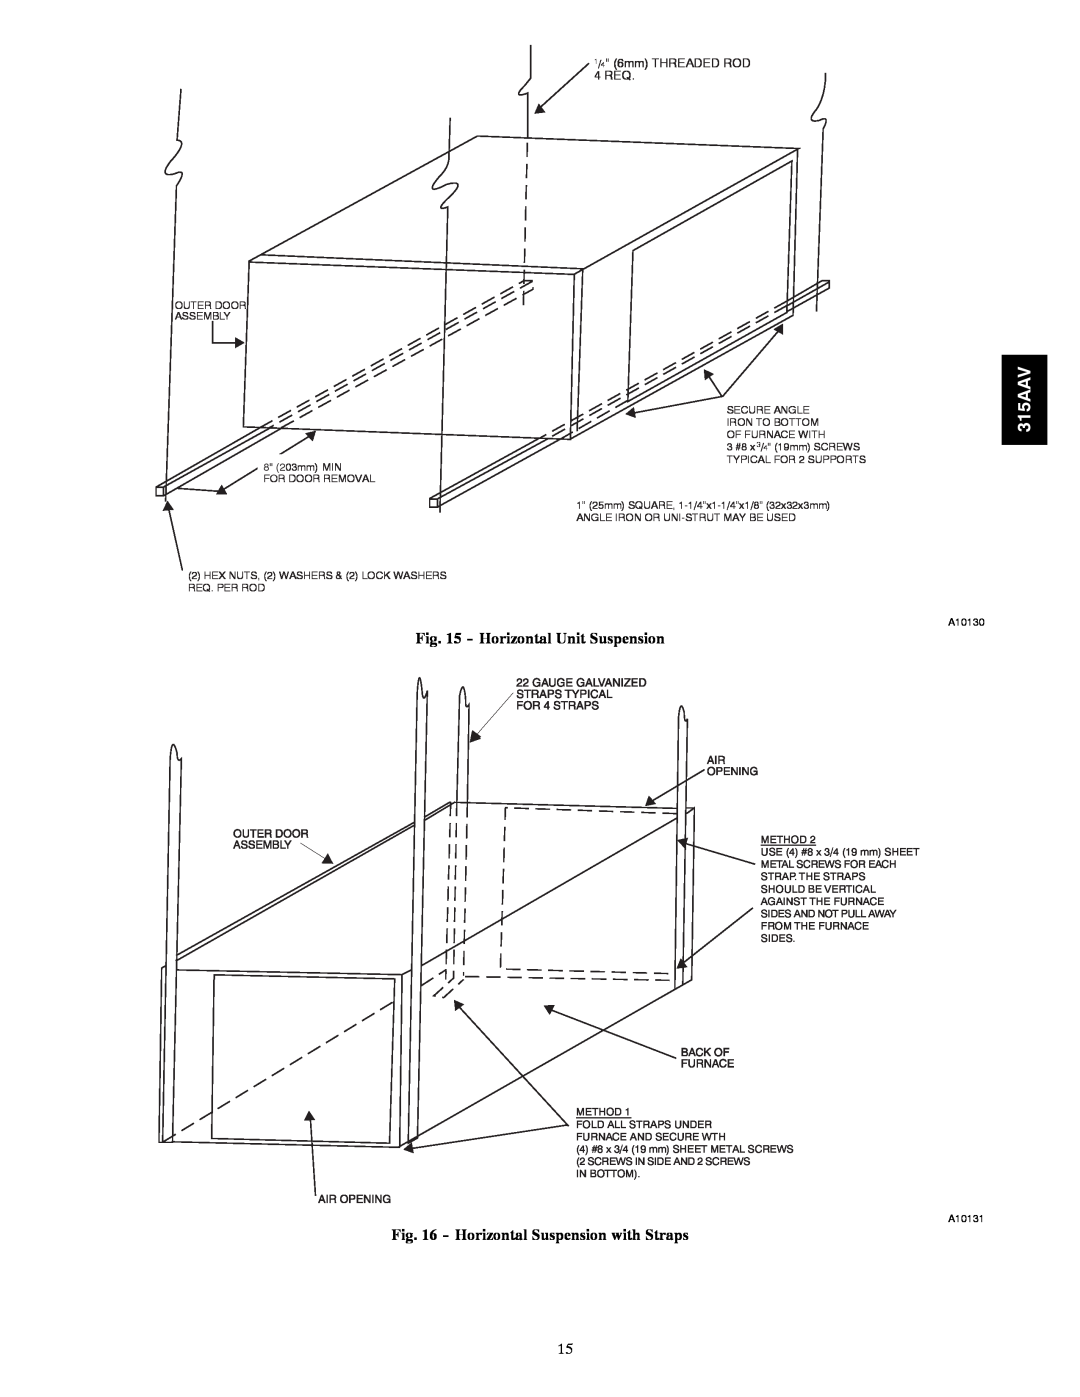 Bryant 315AAV instruction manual Horizontal Unit Suspension, Horizontal Suspension with Straps, 1/4 6mm THREADED ROD 4 REQ 